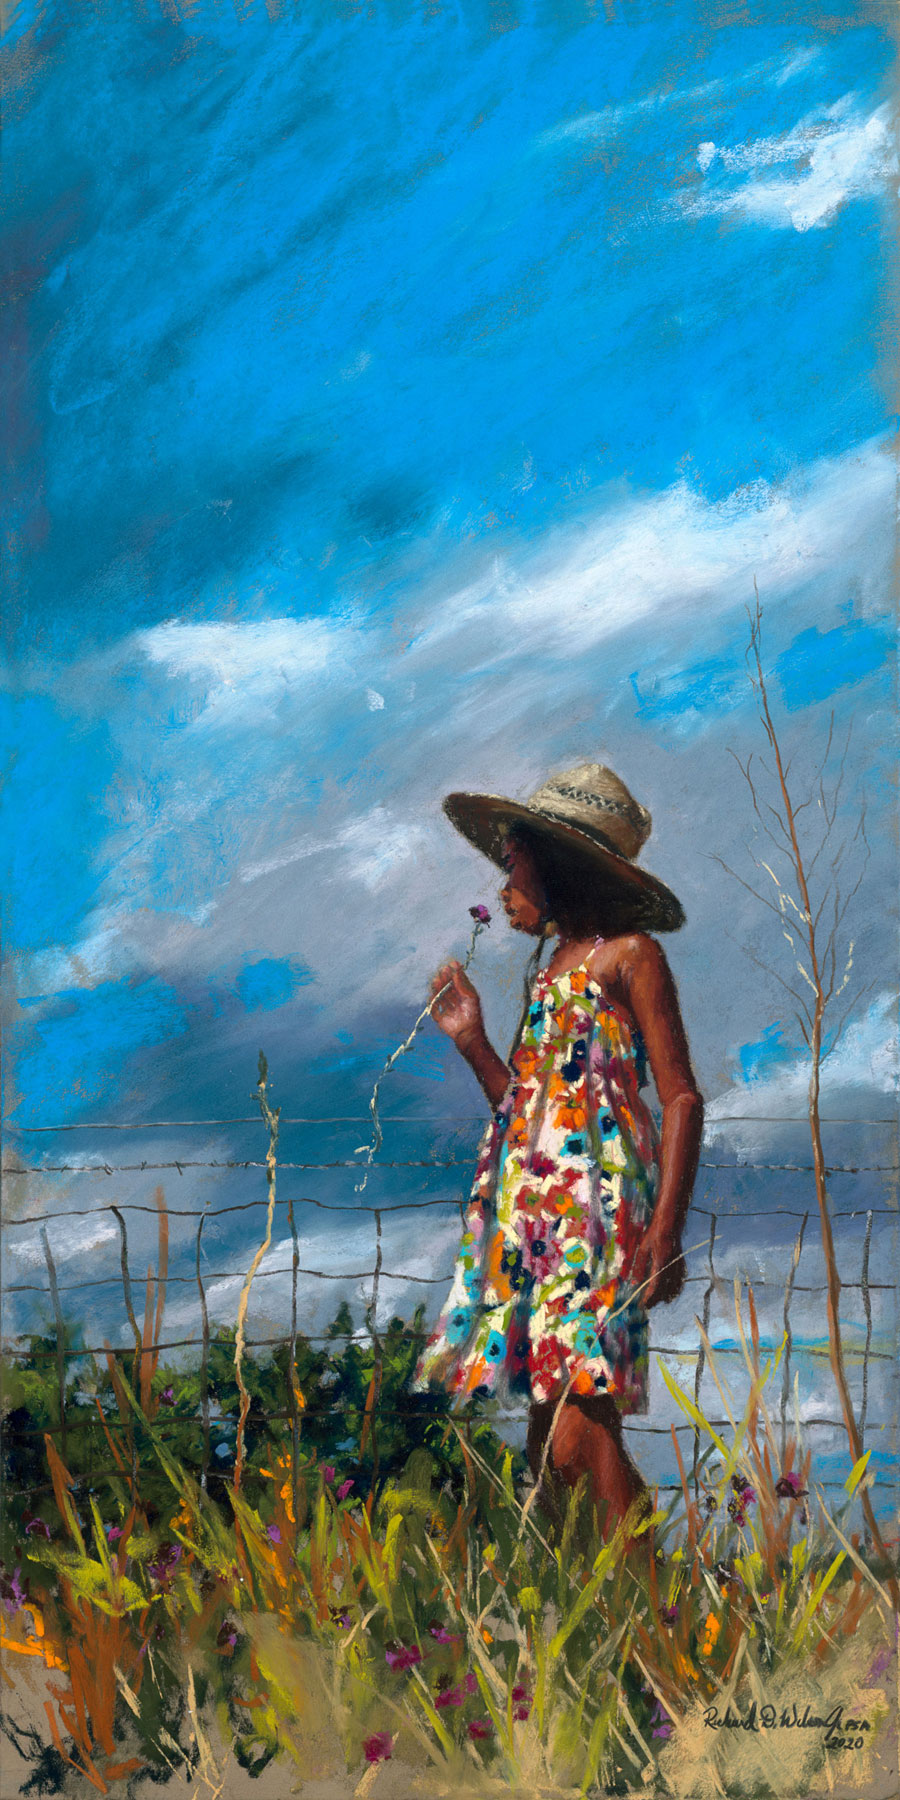 Pastel Live 2022 - Richard Wilson, Under the Southern Blue Sky, pastel